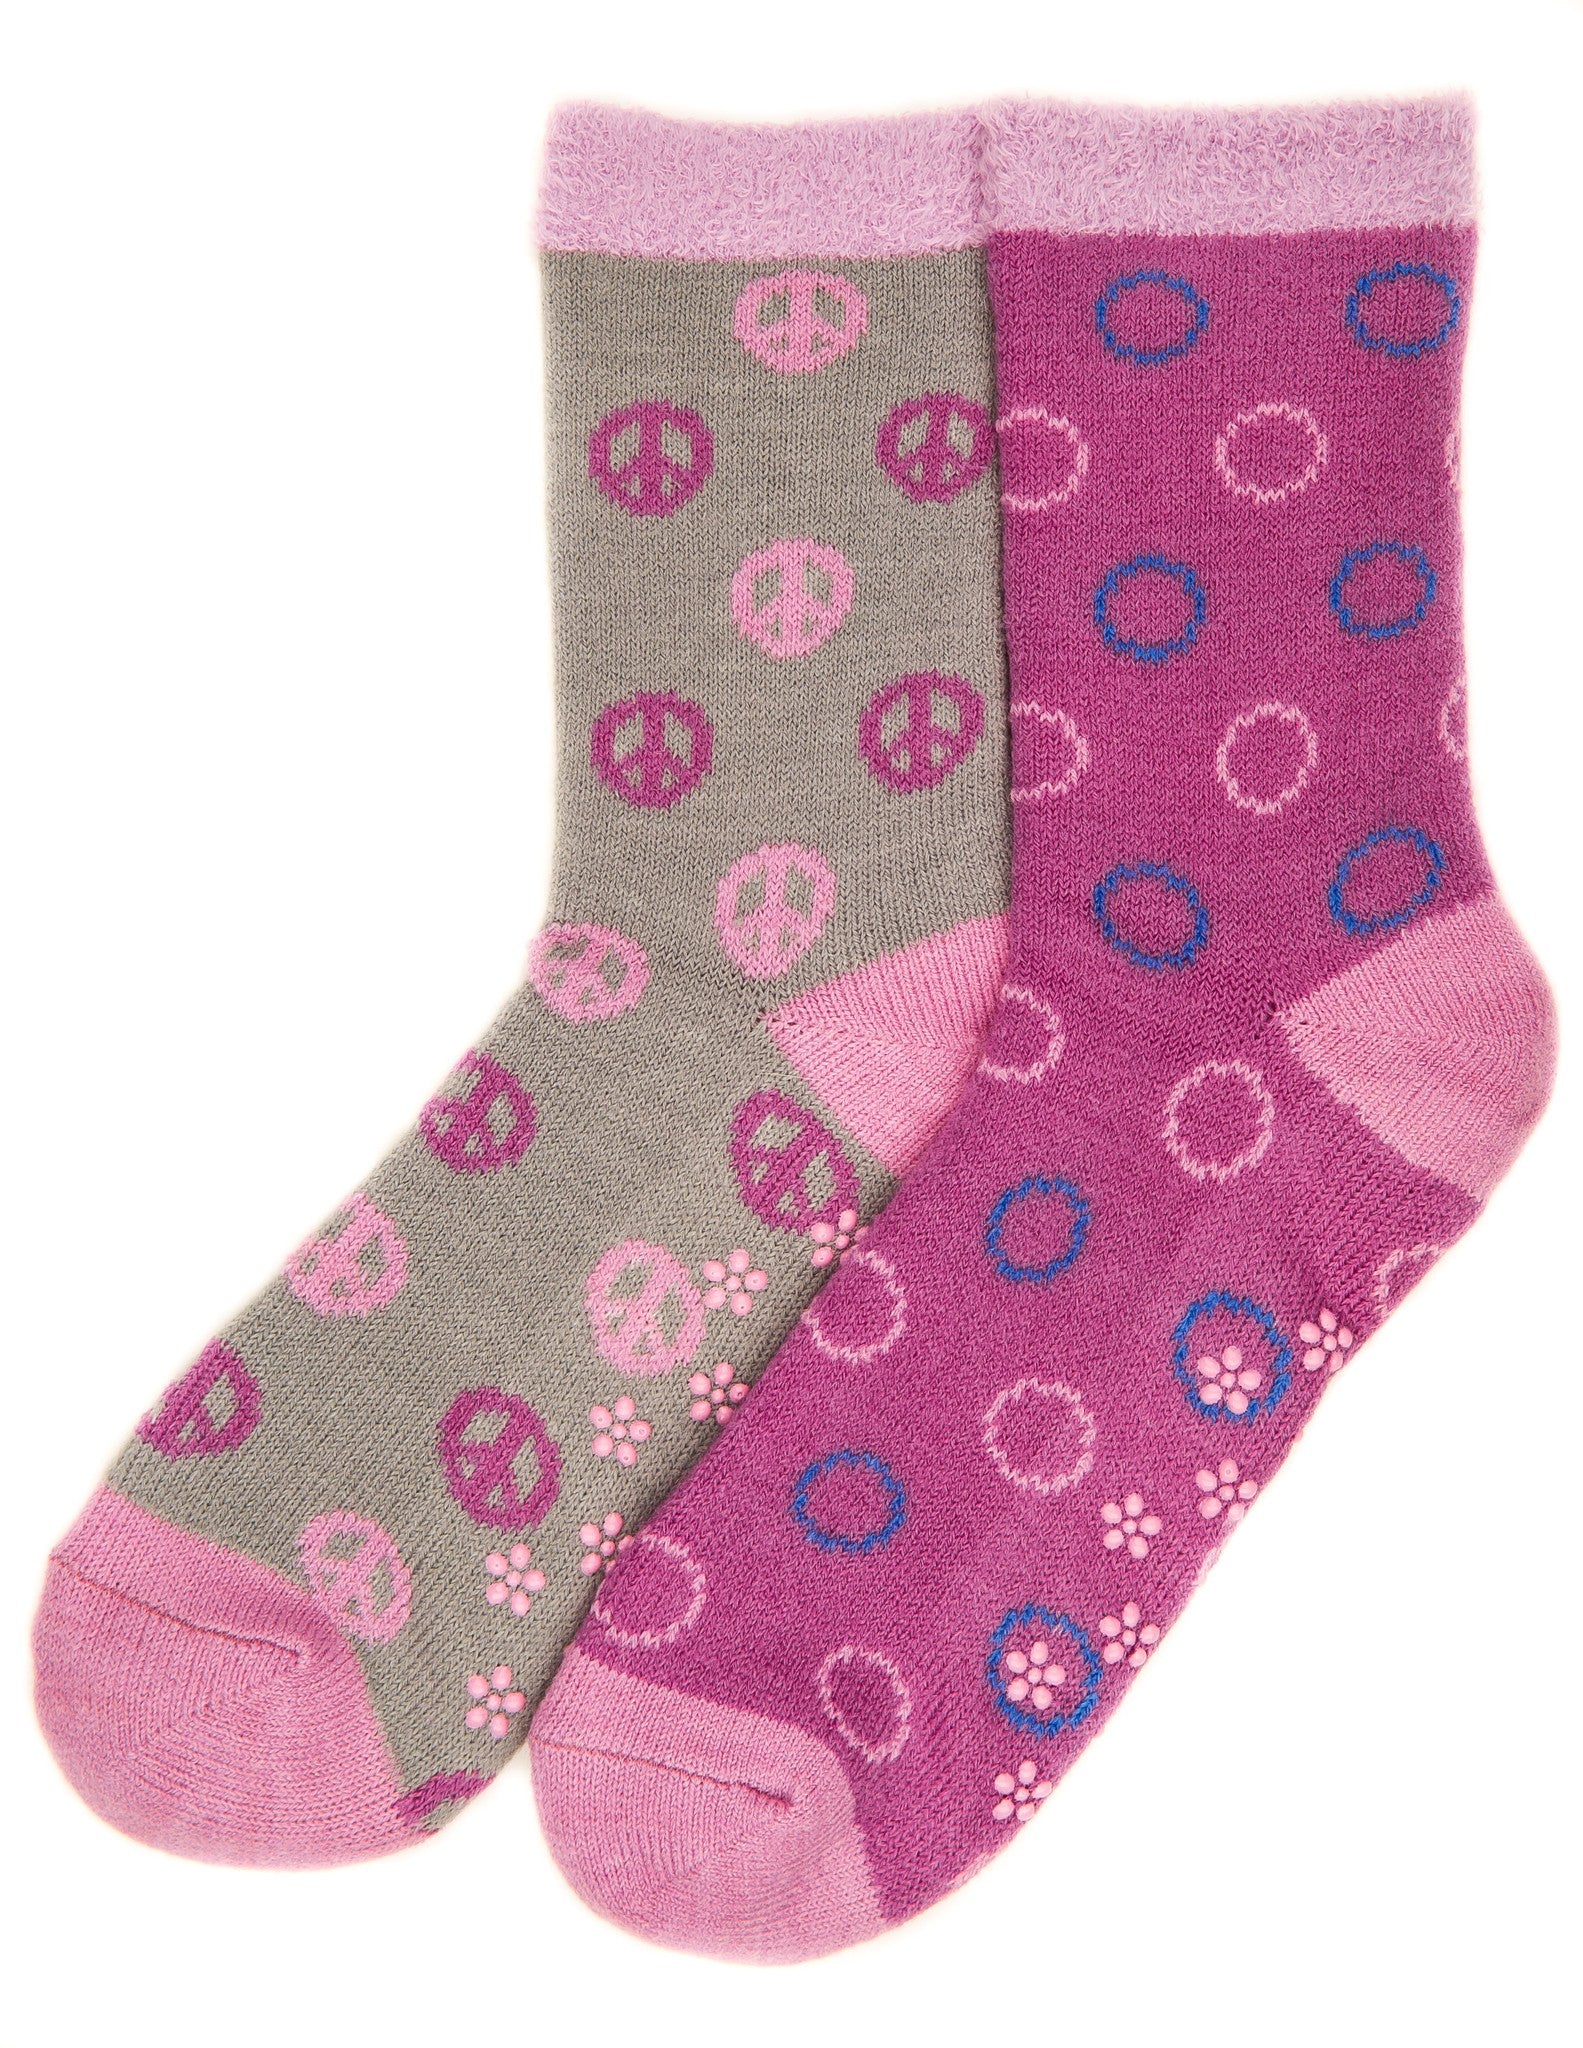 Women's Soft Premium Double Layer Winter Crew Socks - 2 Pairs